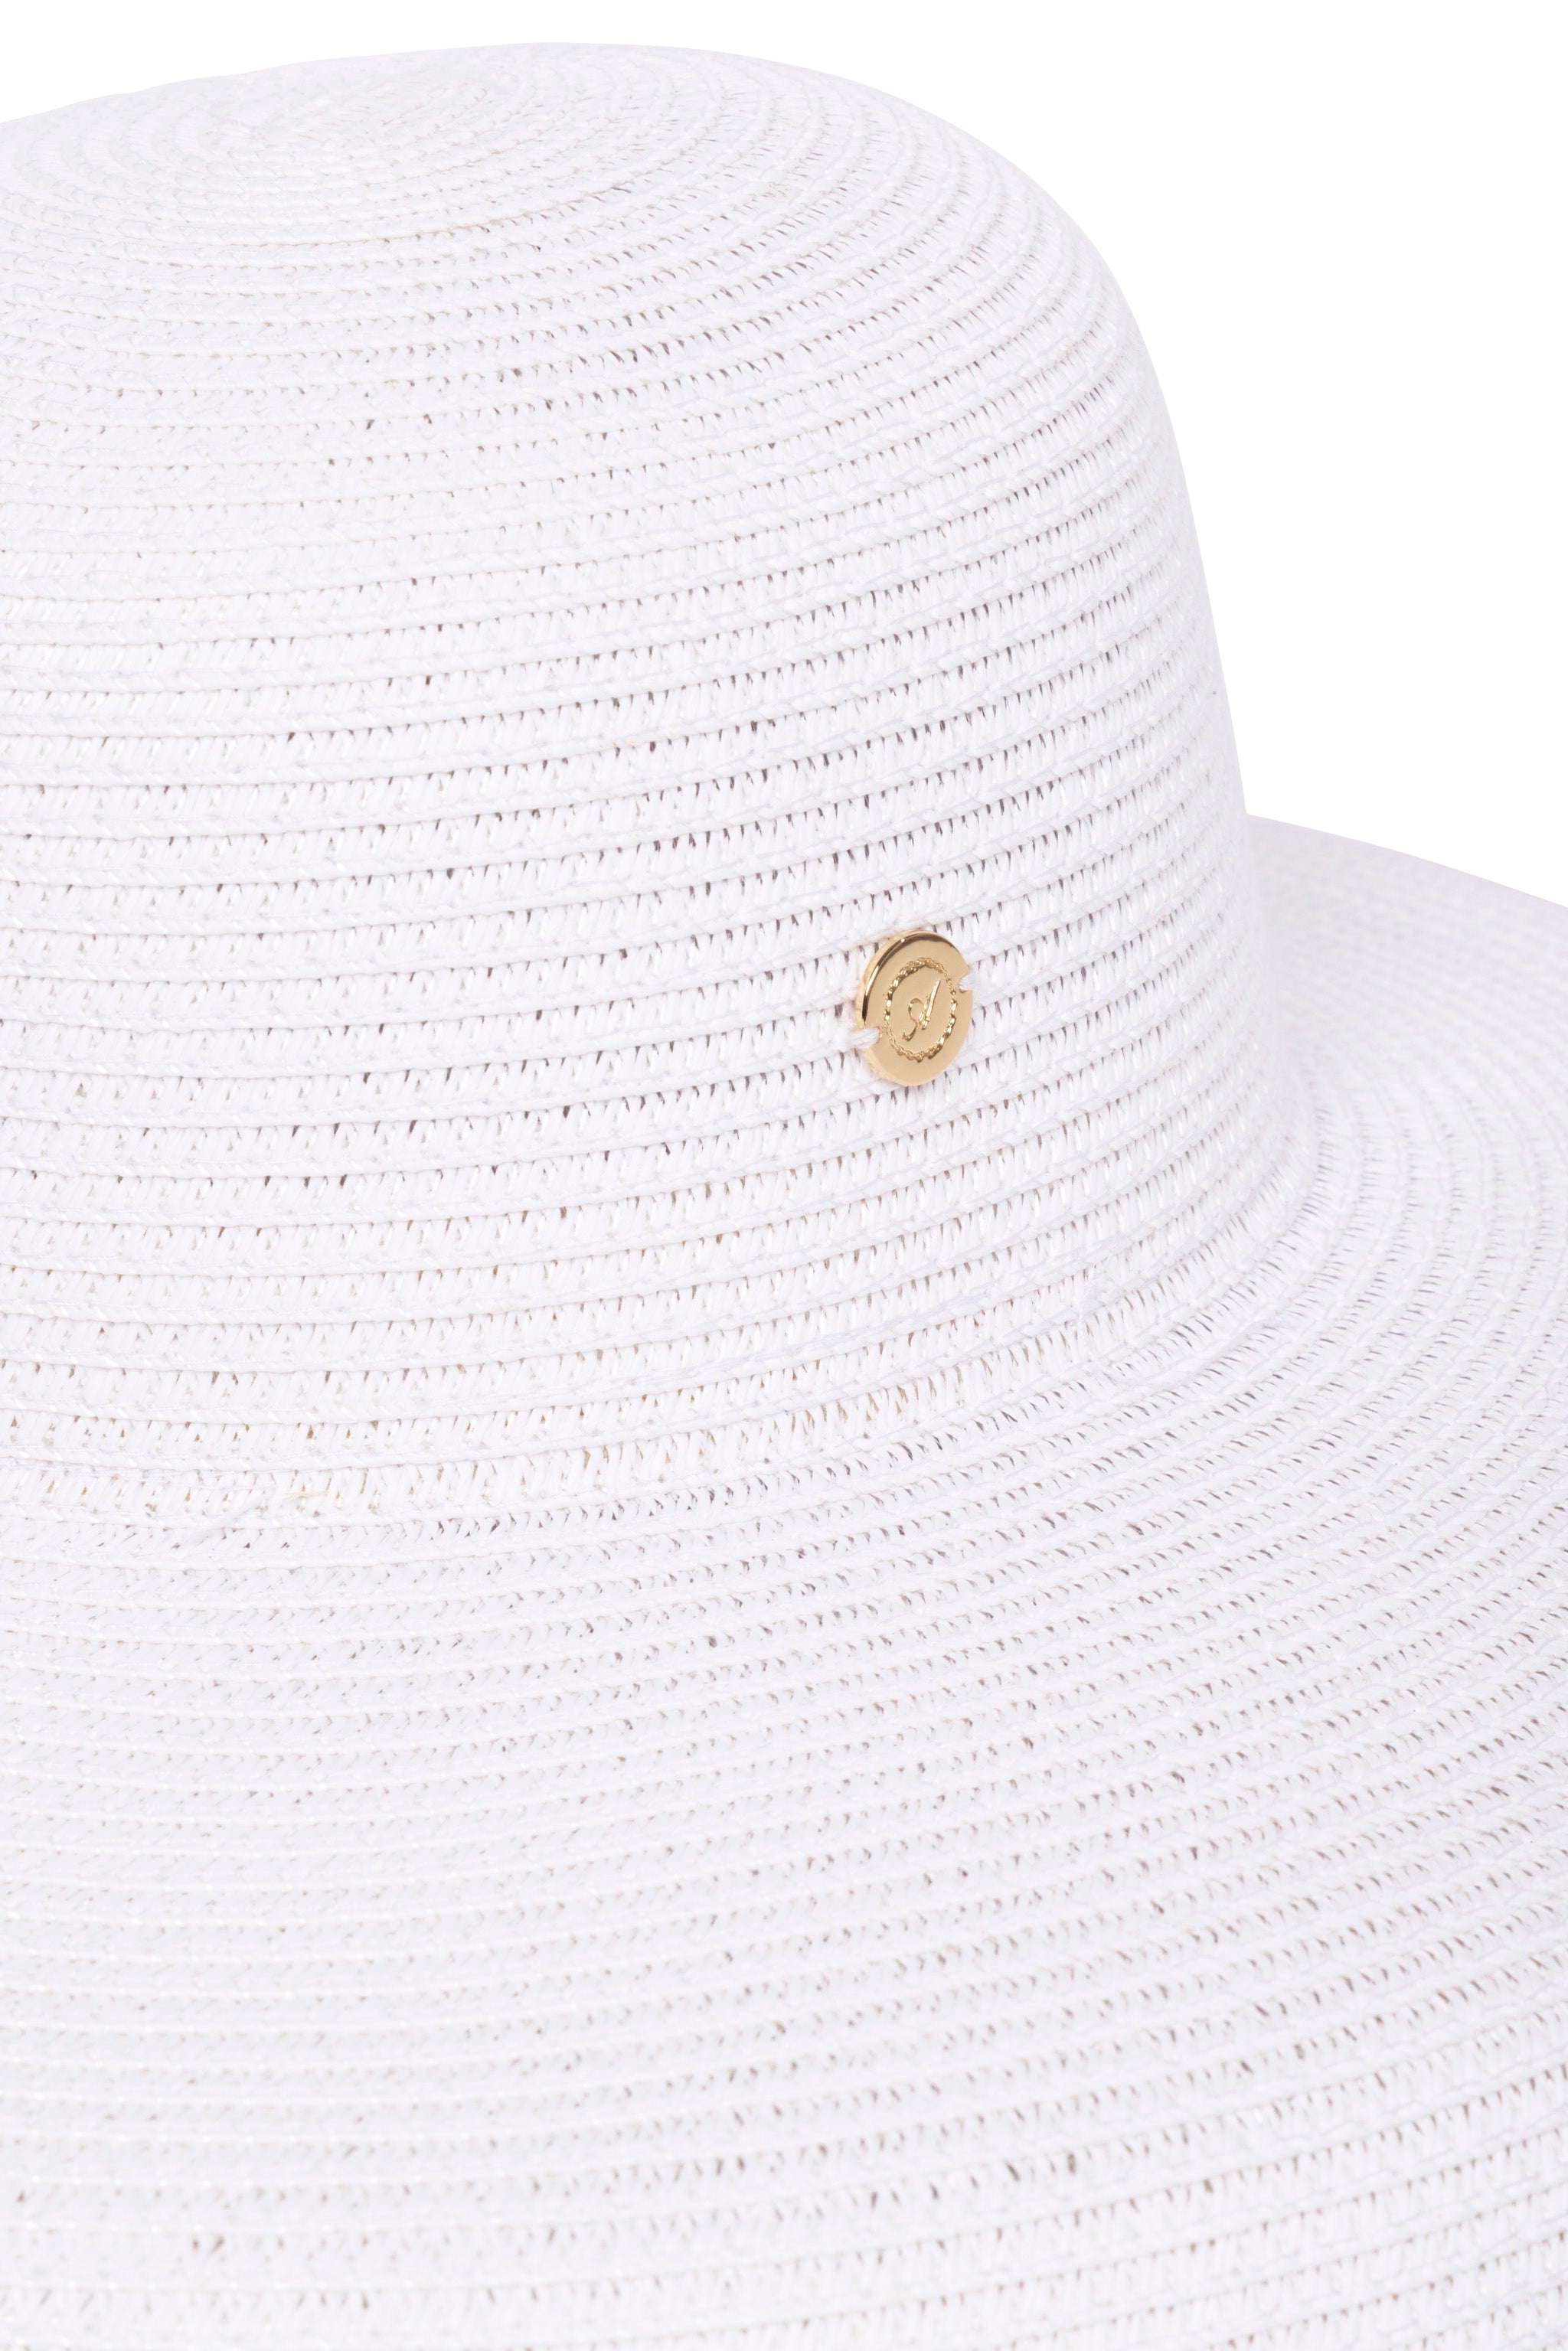 Hepburn Hat (White)